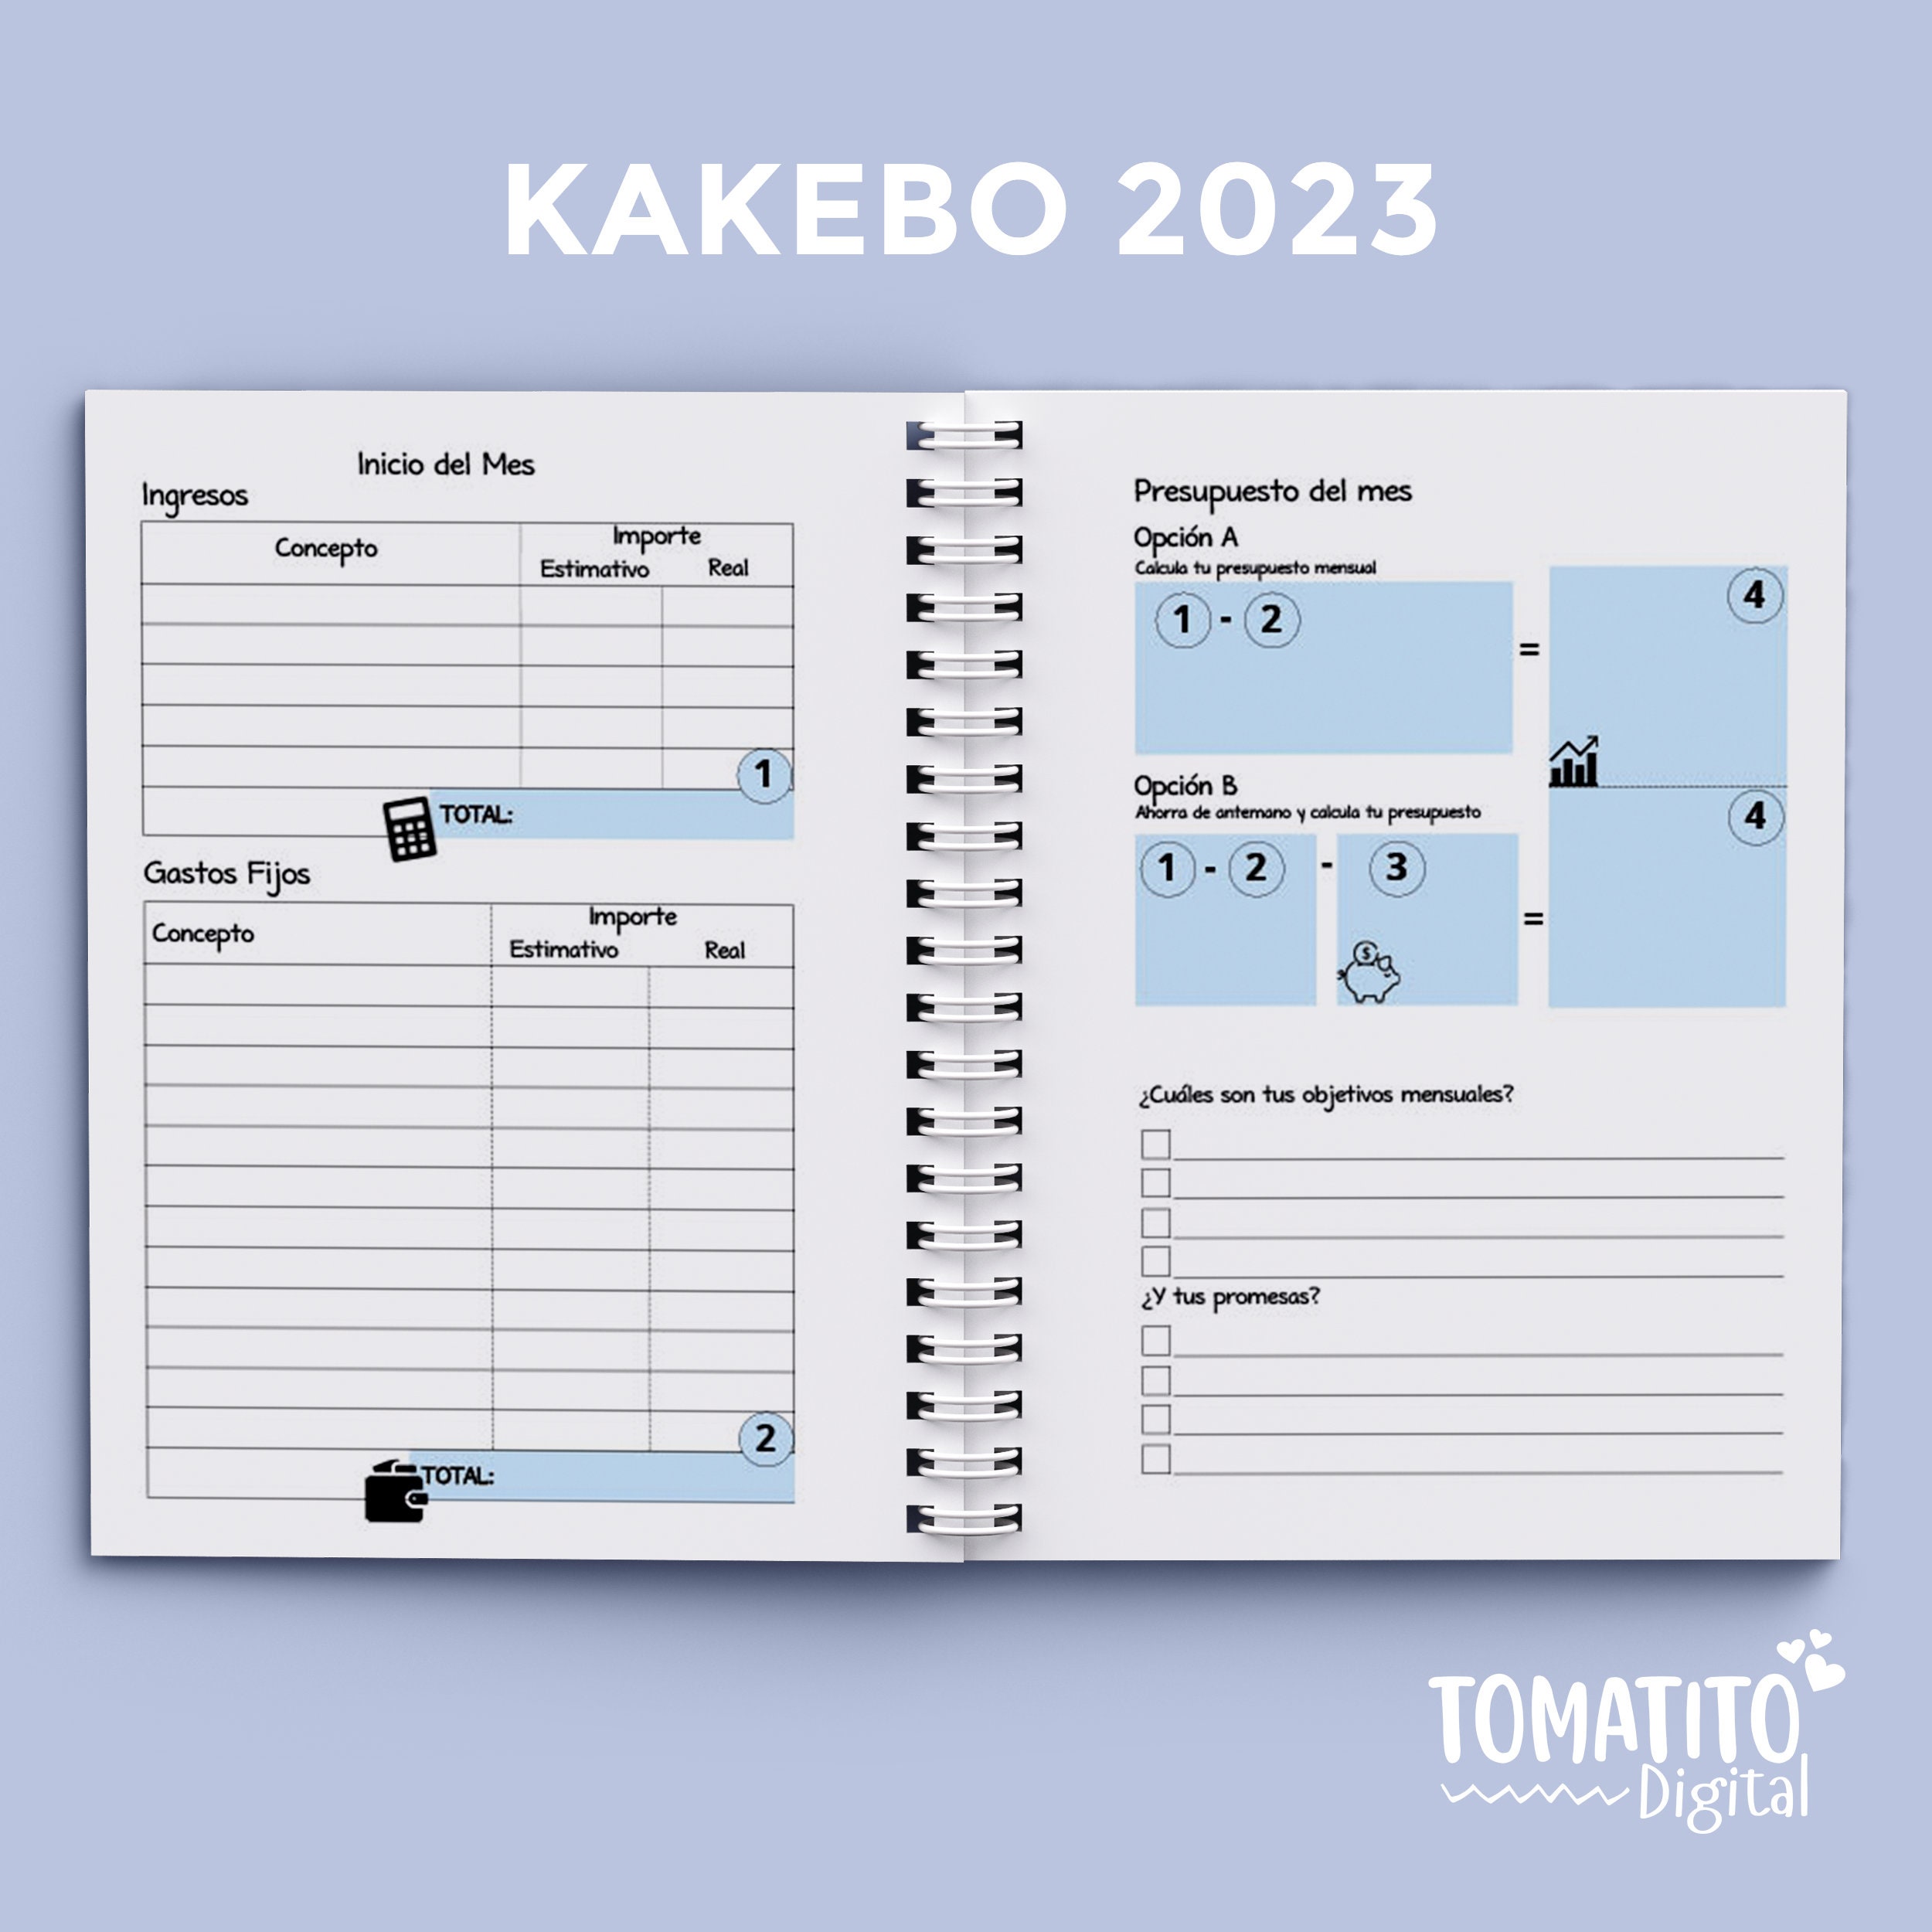 Kakebo Finance Agenda 